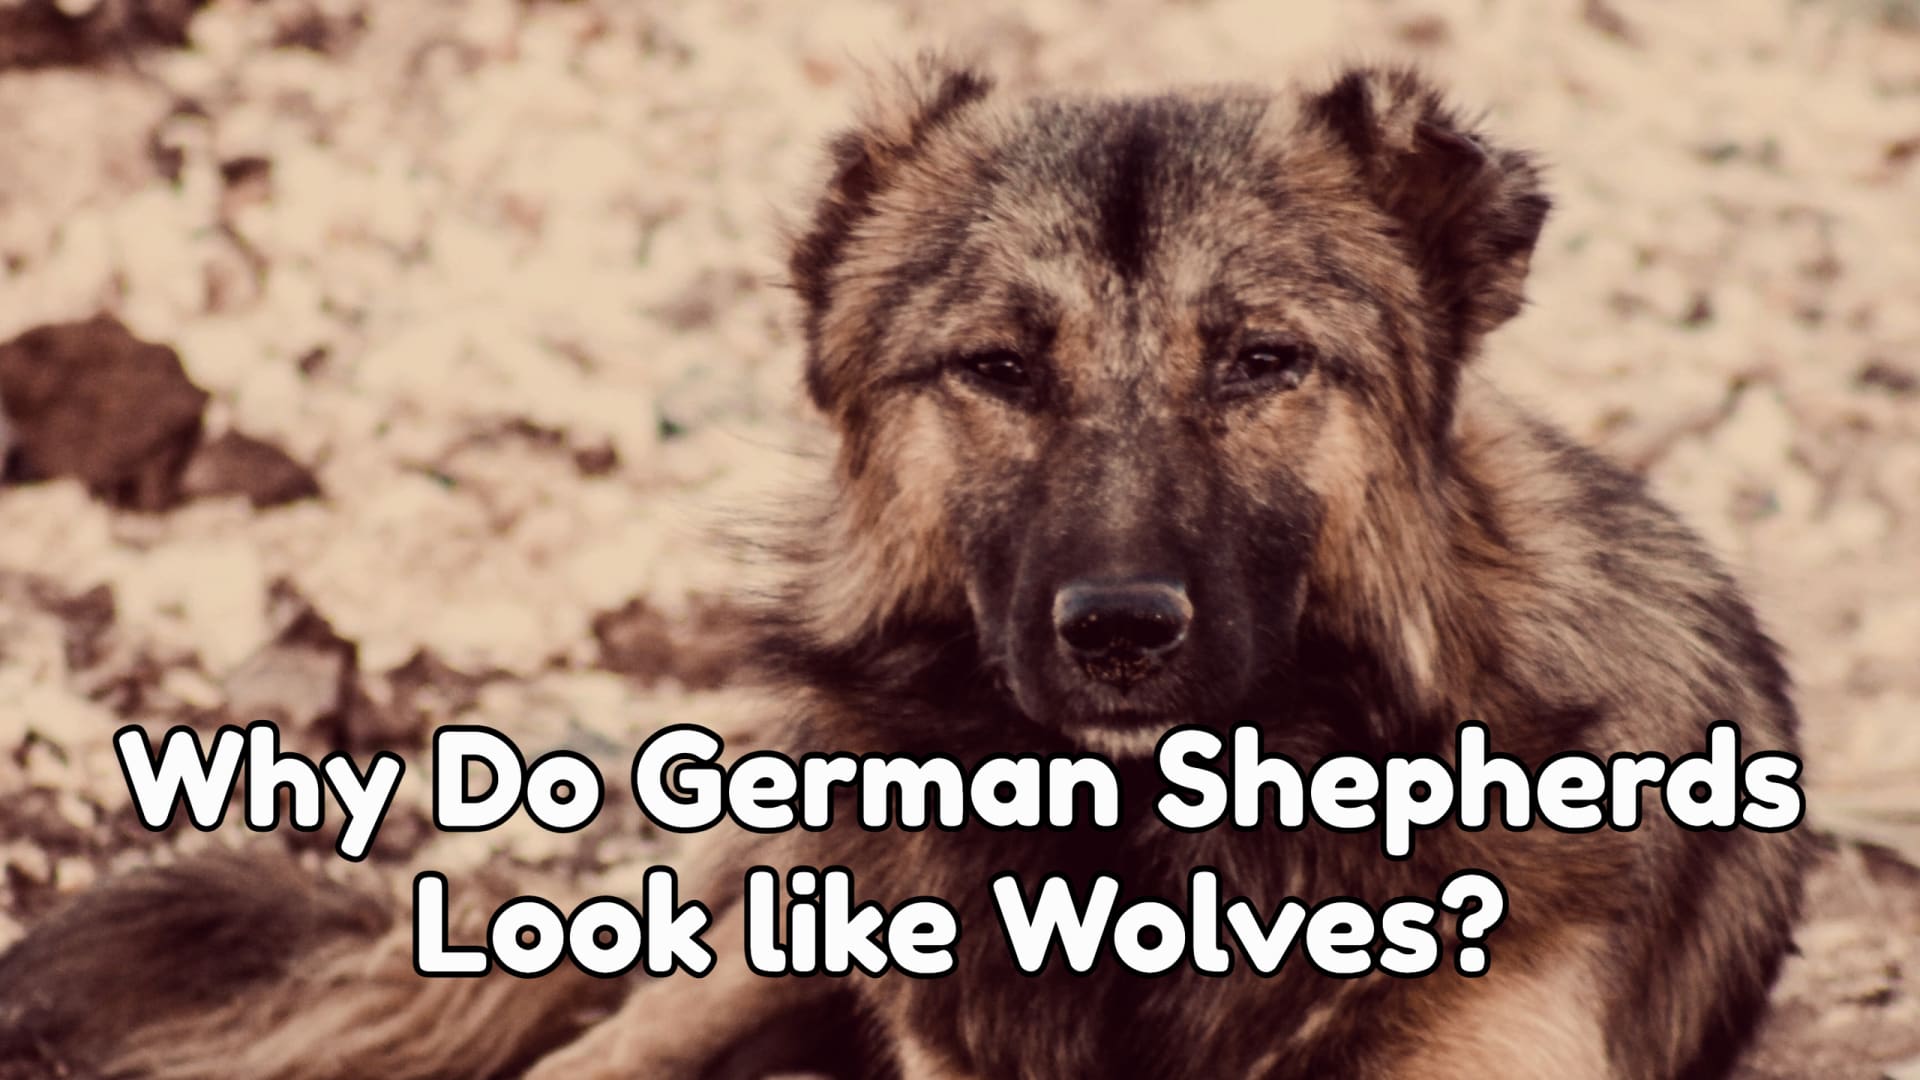 Why Do German Shepherds Look like Wolves?